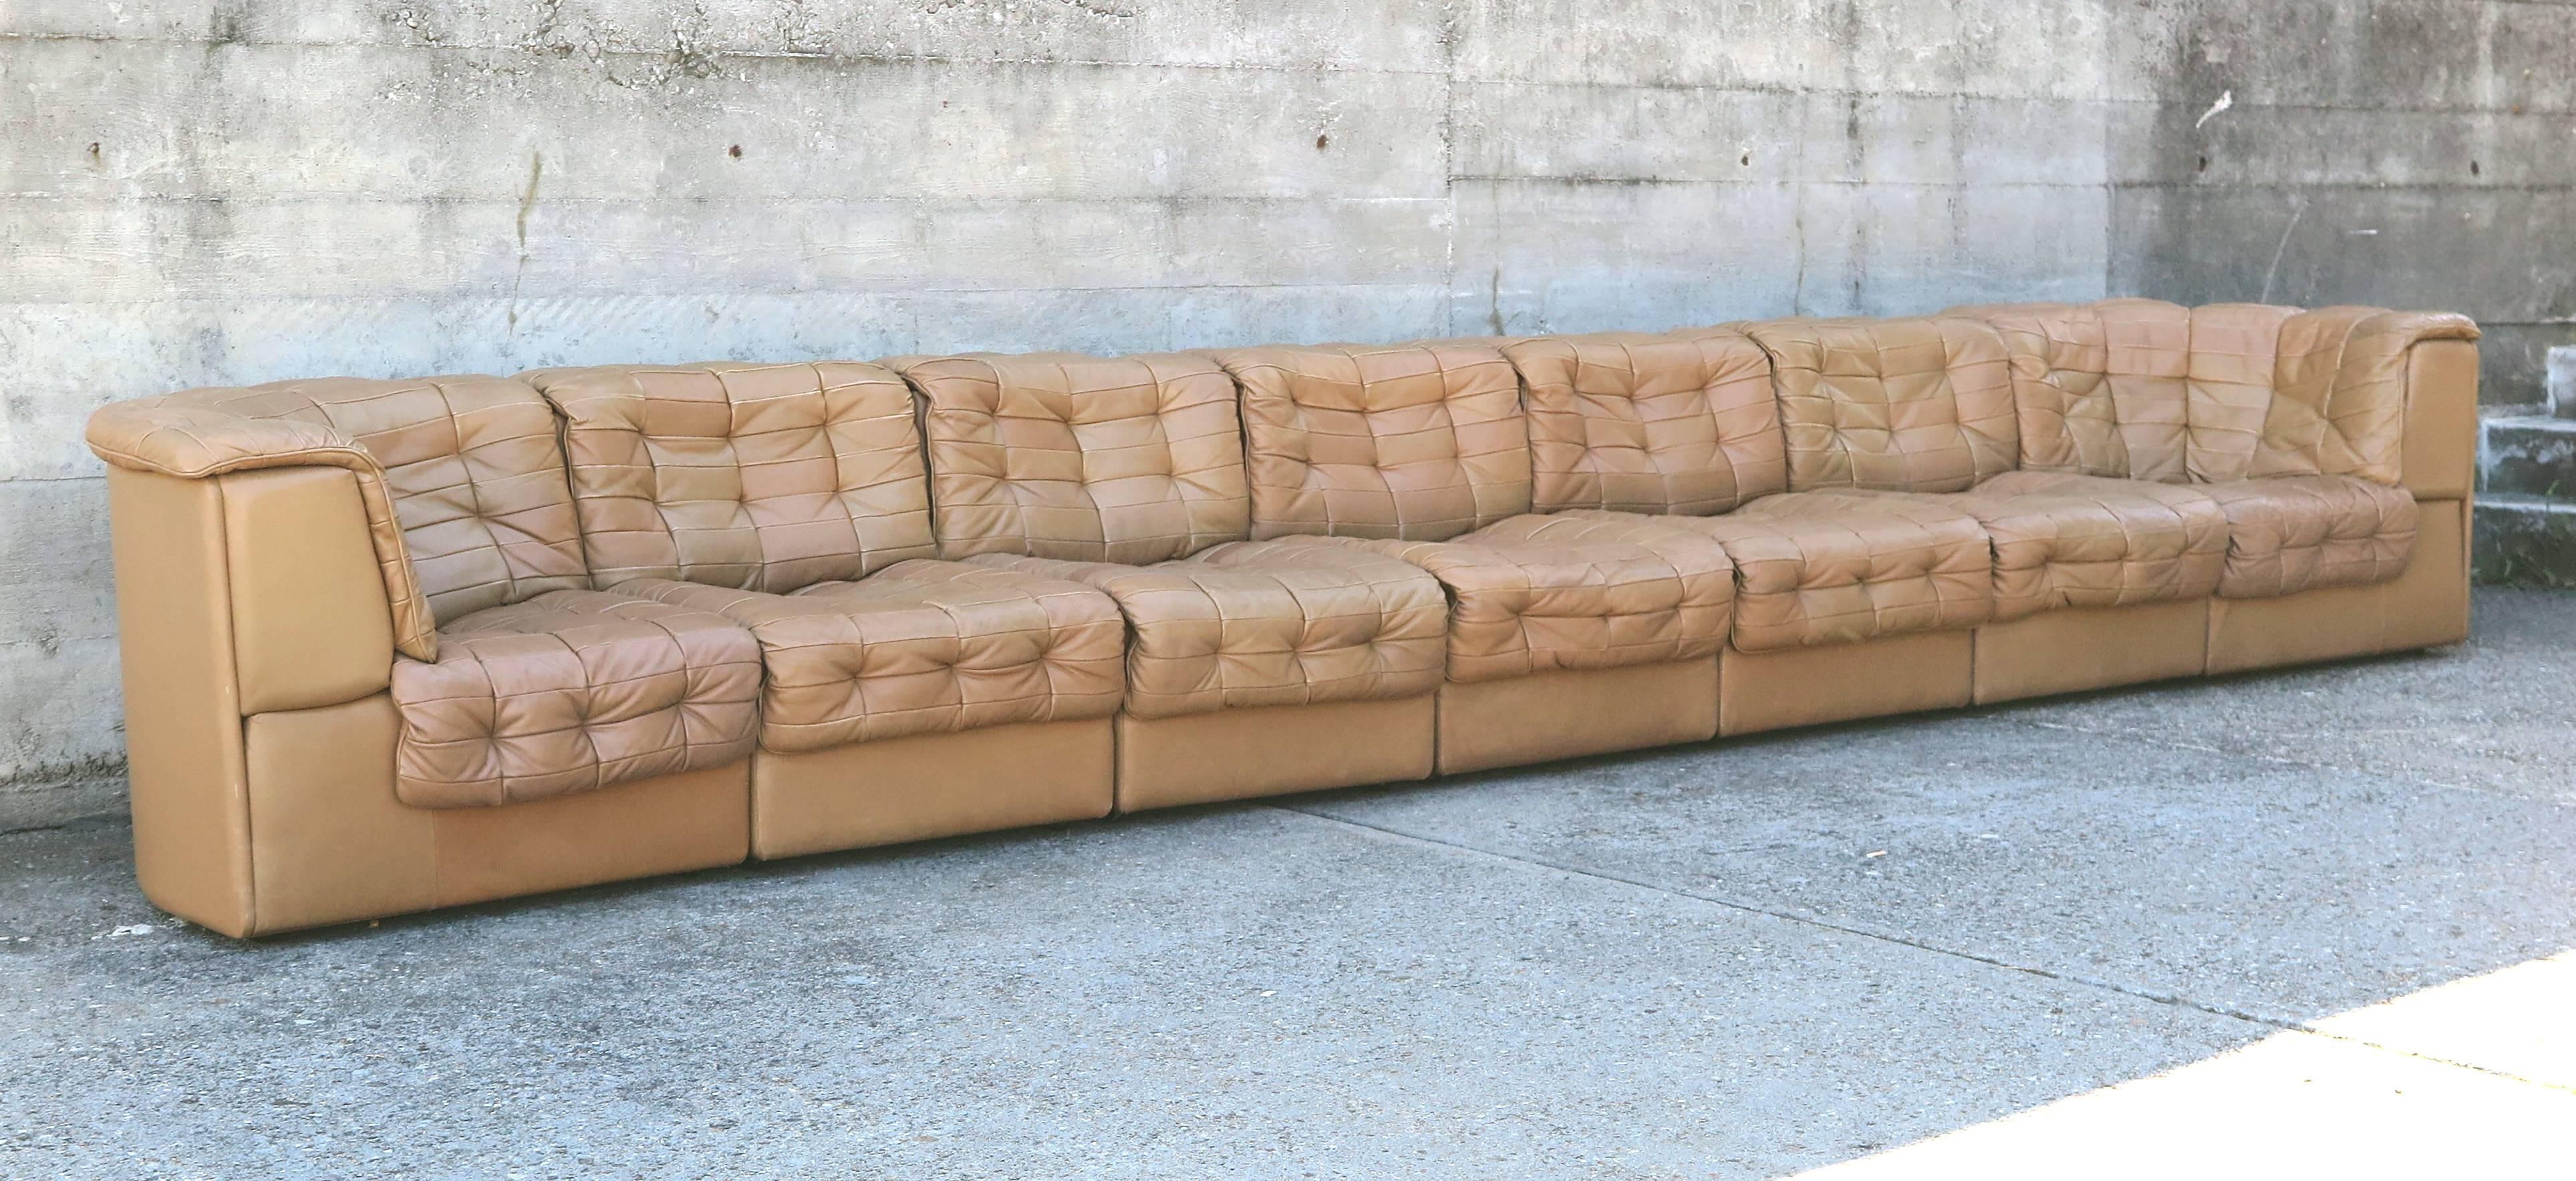 Swiss De Sede Light Brown Leather Modular Sofa, 7 Seats + 2 Ottoman For Sale